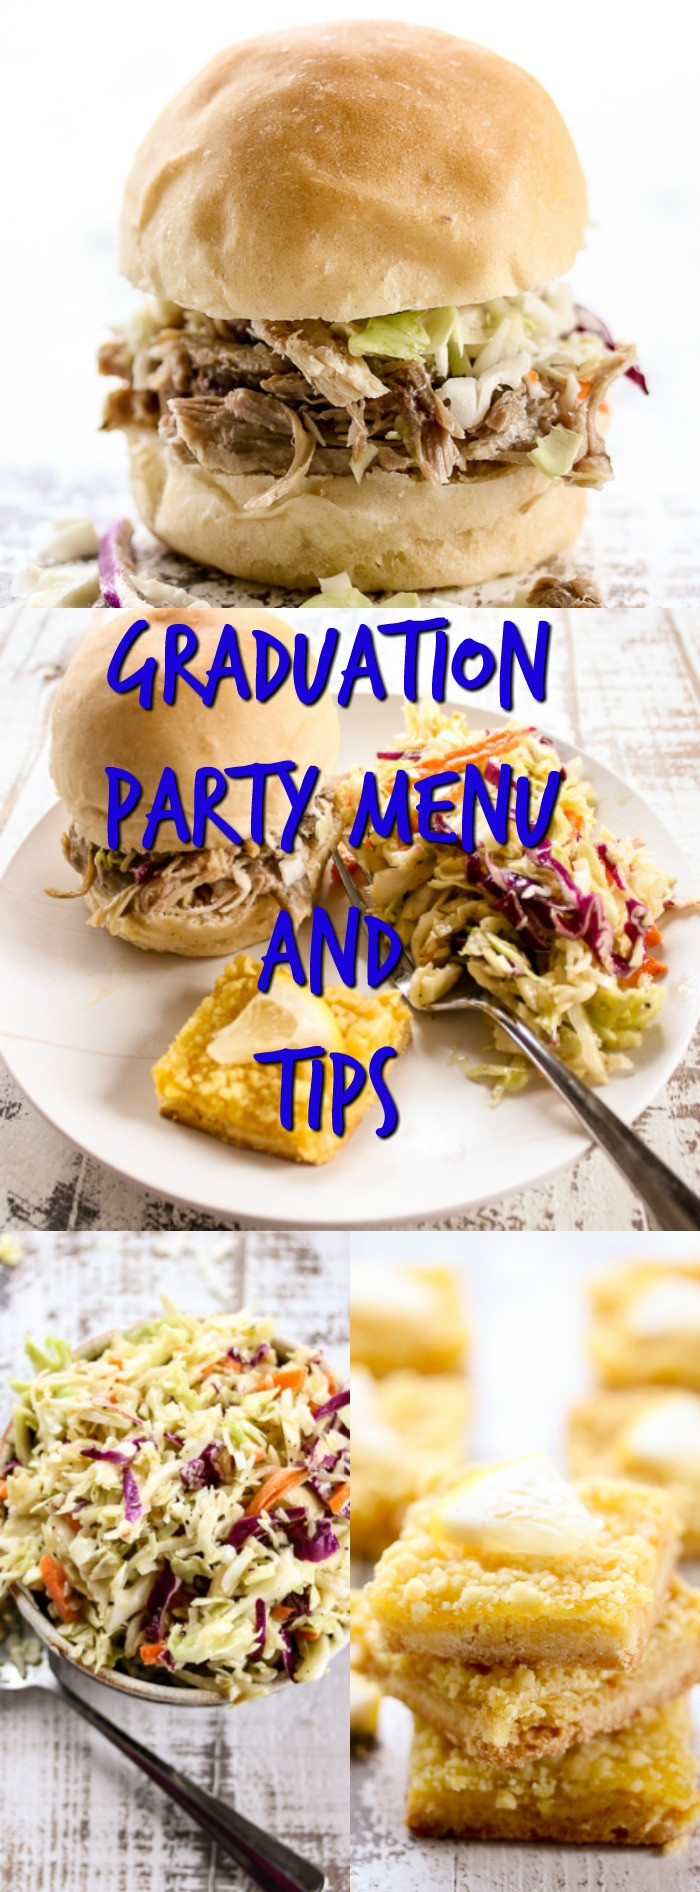 Backyard Graduation Party Menu Ideas
 Graduation Party Menu and Tips Lisa s Dinnertime Dish